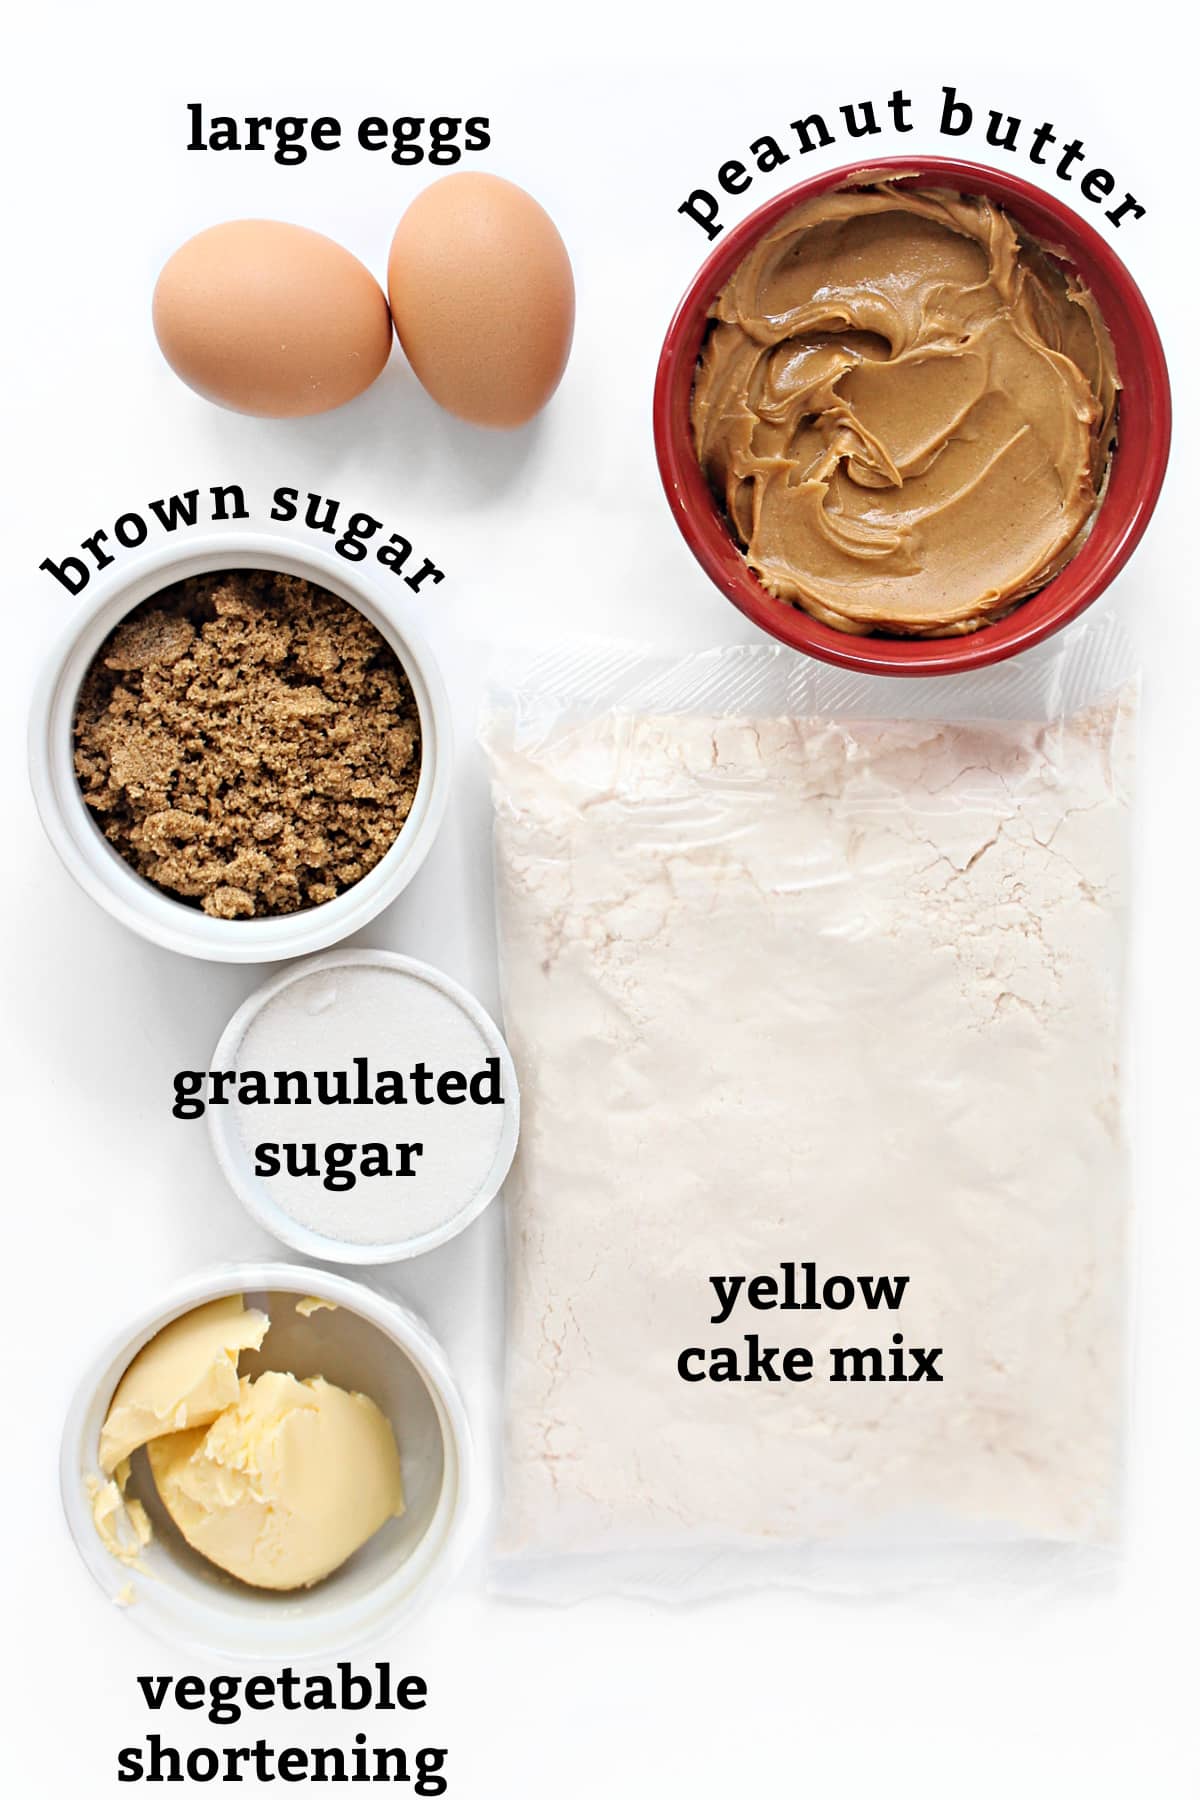 Ingredients: large eggs, peanut butter, brown sugar, granulated sugar, yellow cake mix, vegetable shortening.